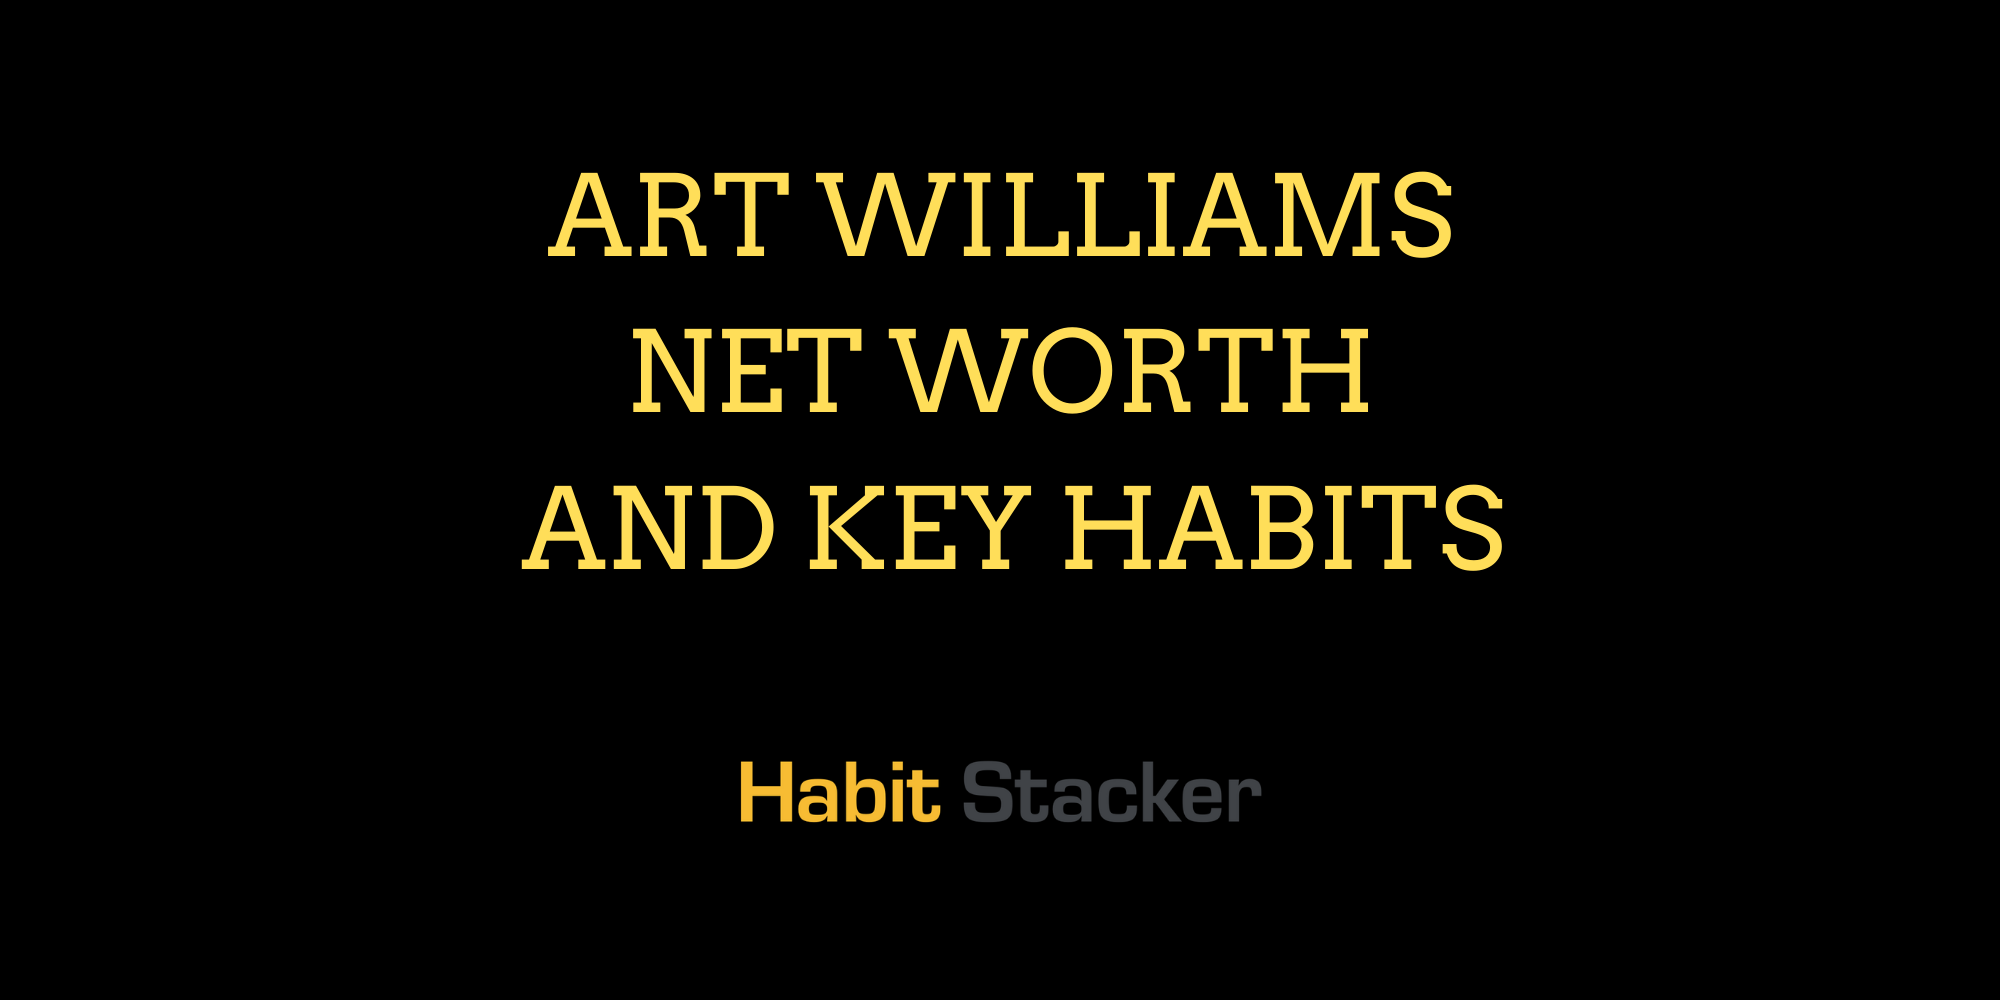 Art Williams Net Worth and Key Habits